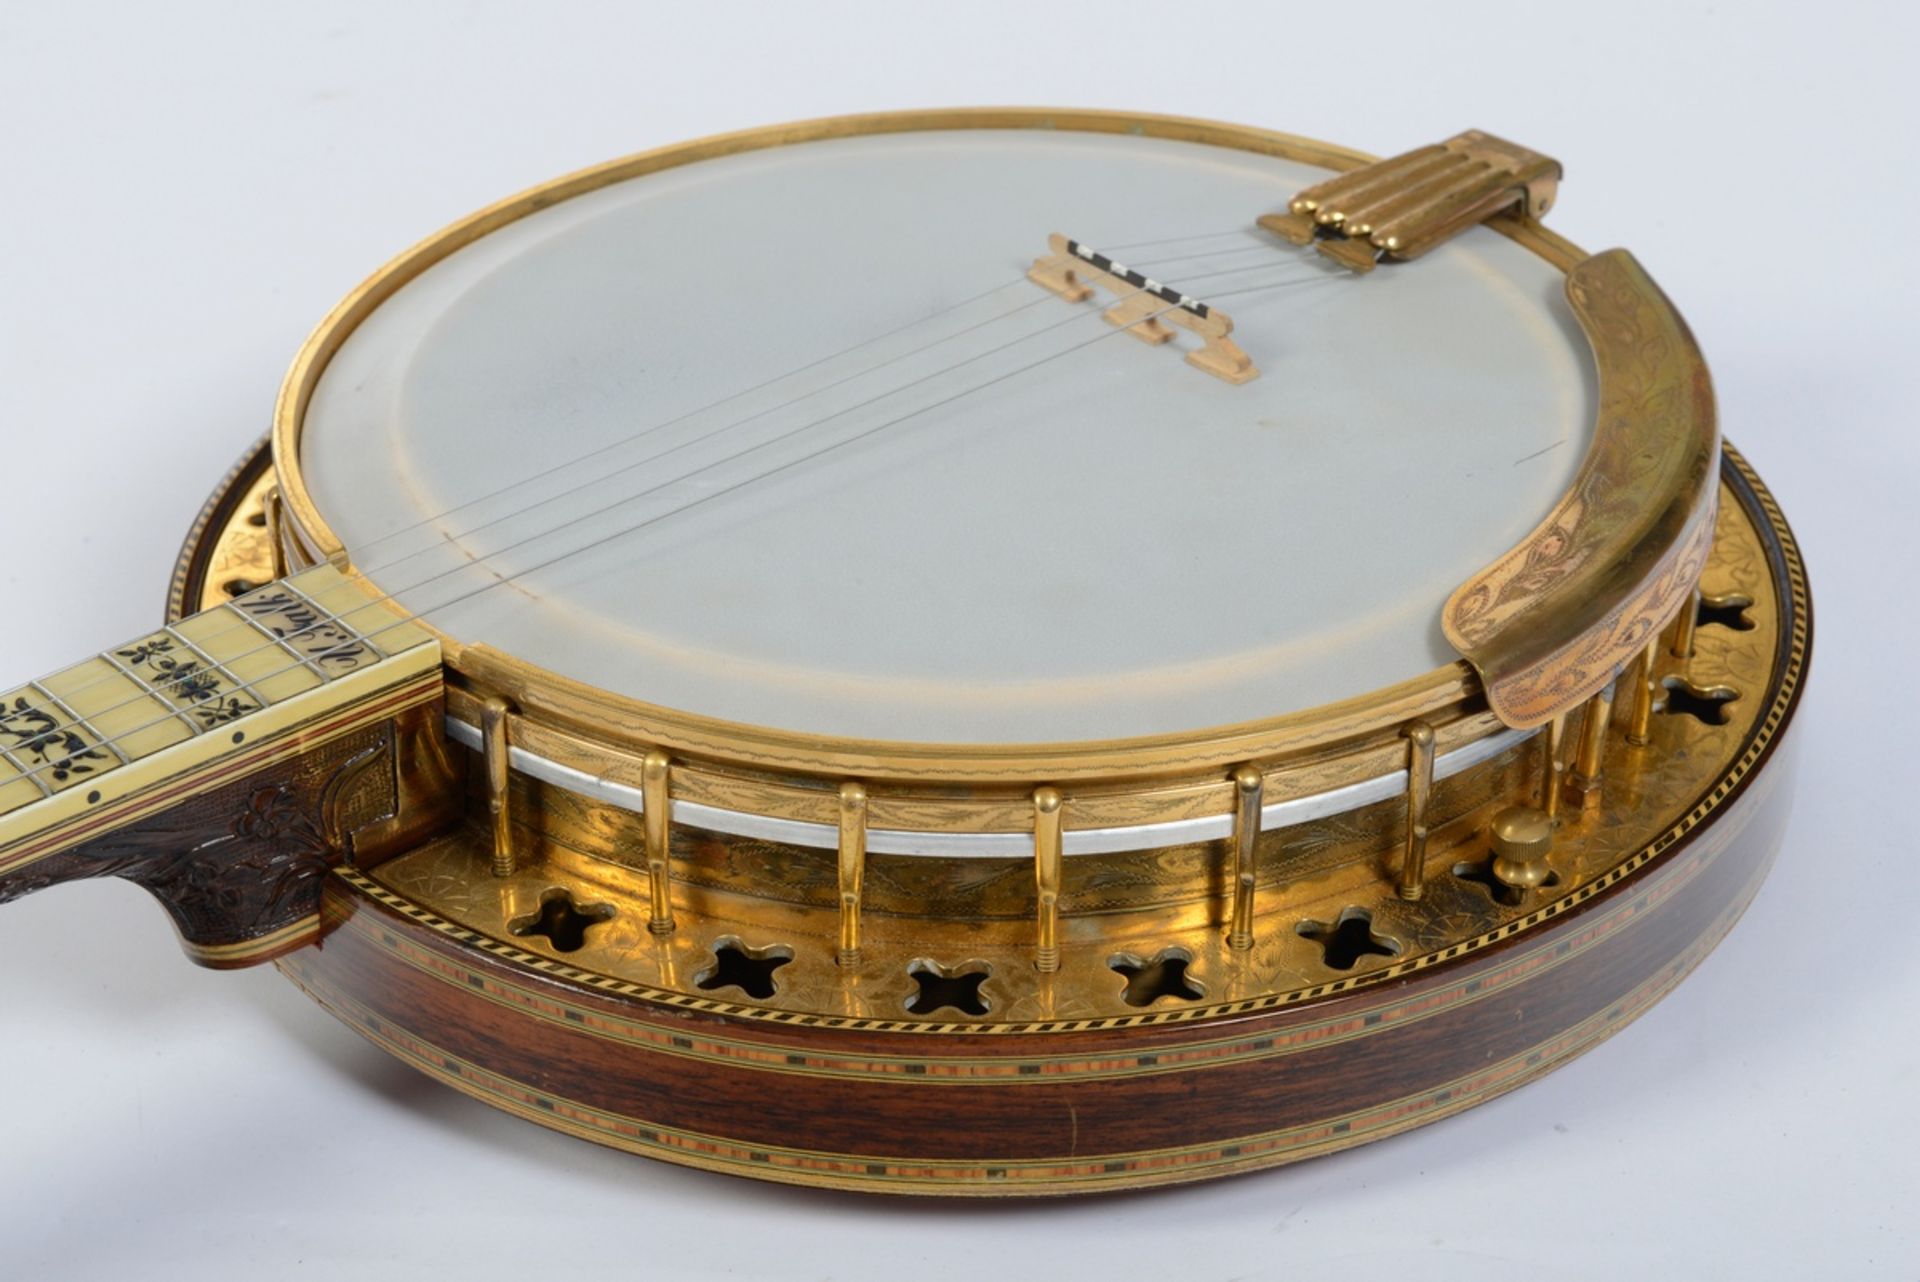 Tenor Banjo, Epiphone Banjo Company, House of Strathopoulo Inc. New York, model Recording Art Conce - Image 12 of 24